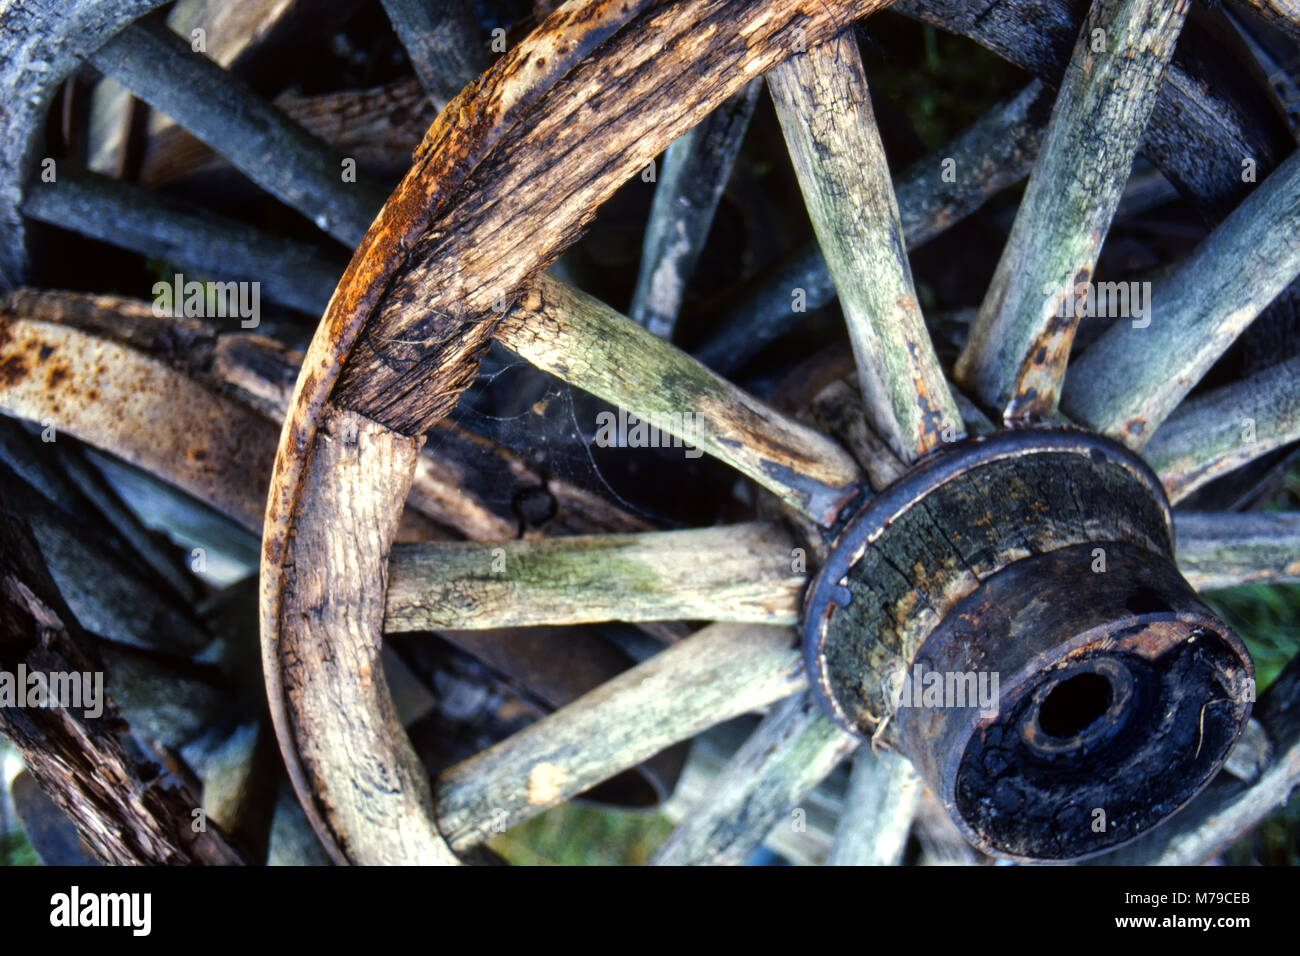 Spoked wooden wheels Stock Photo